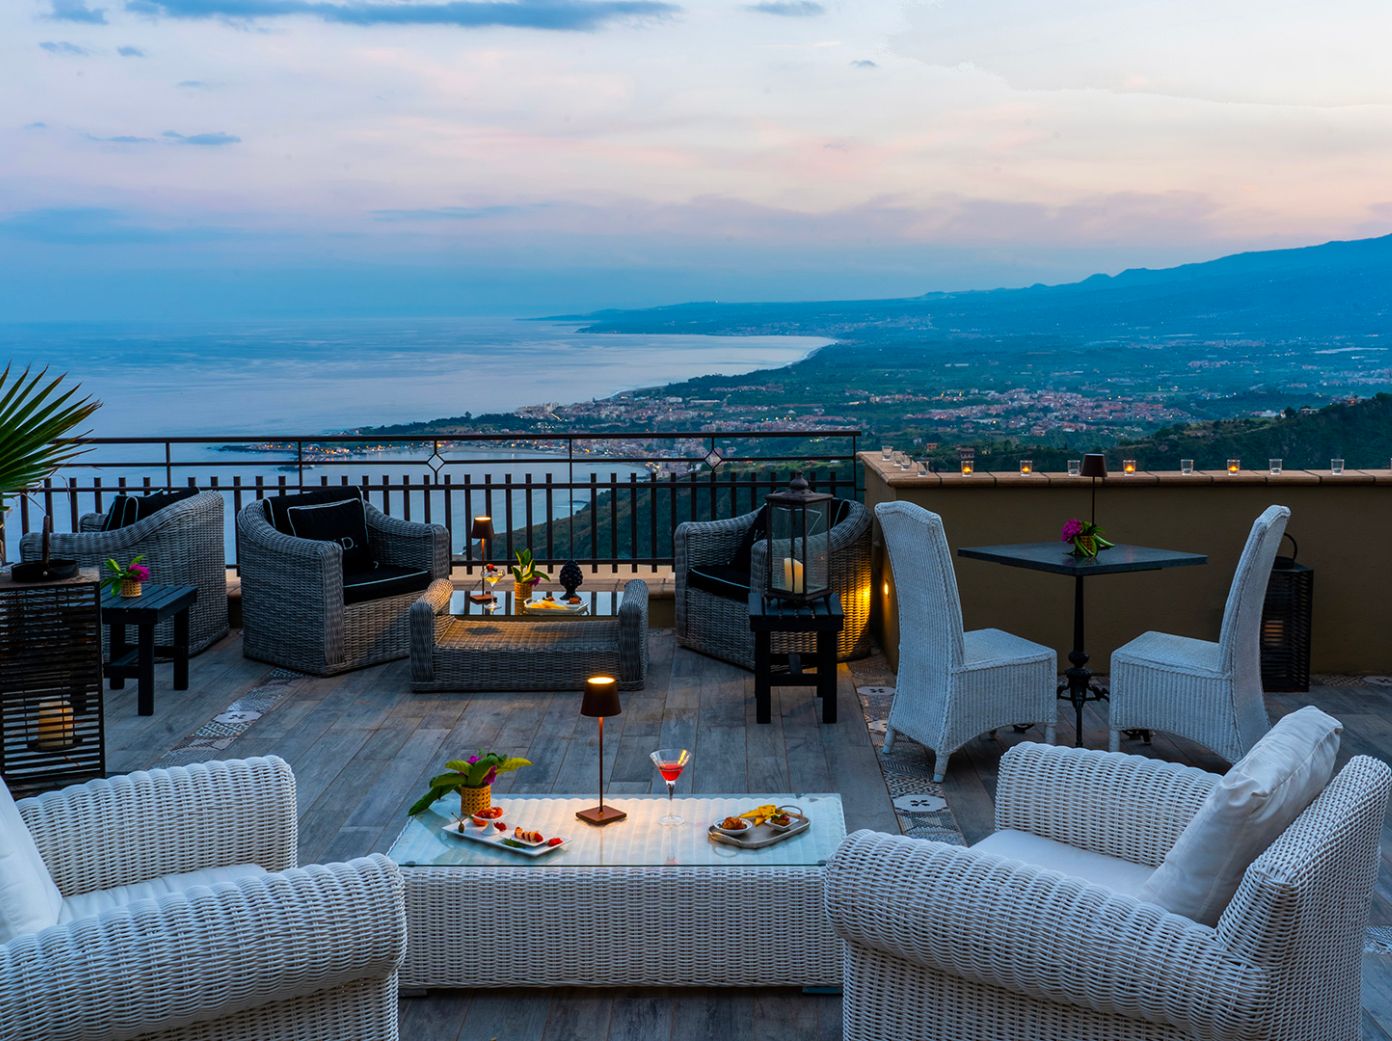 Hotel Villa Ducale hotels in Taormina